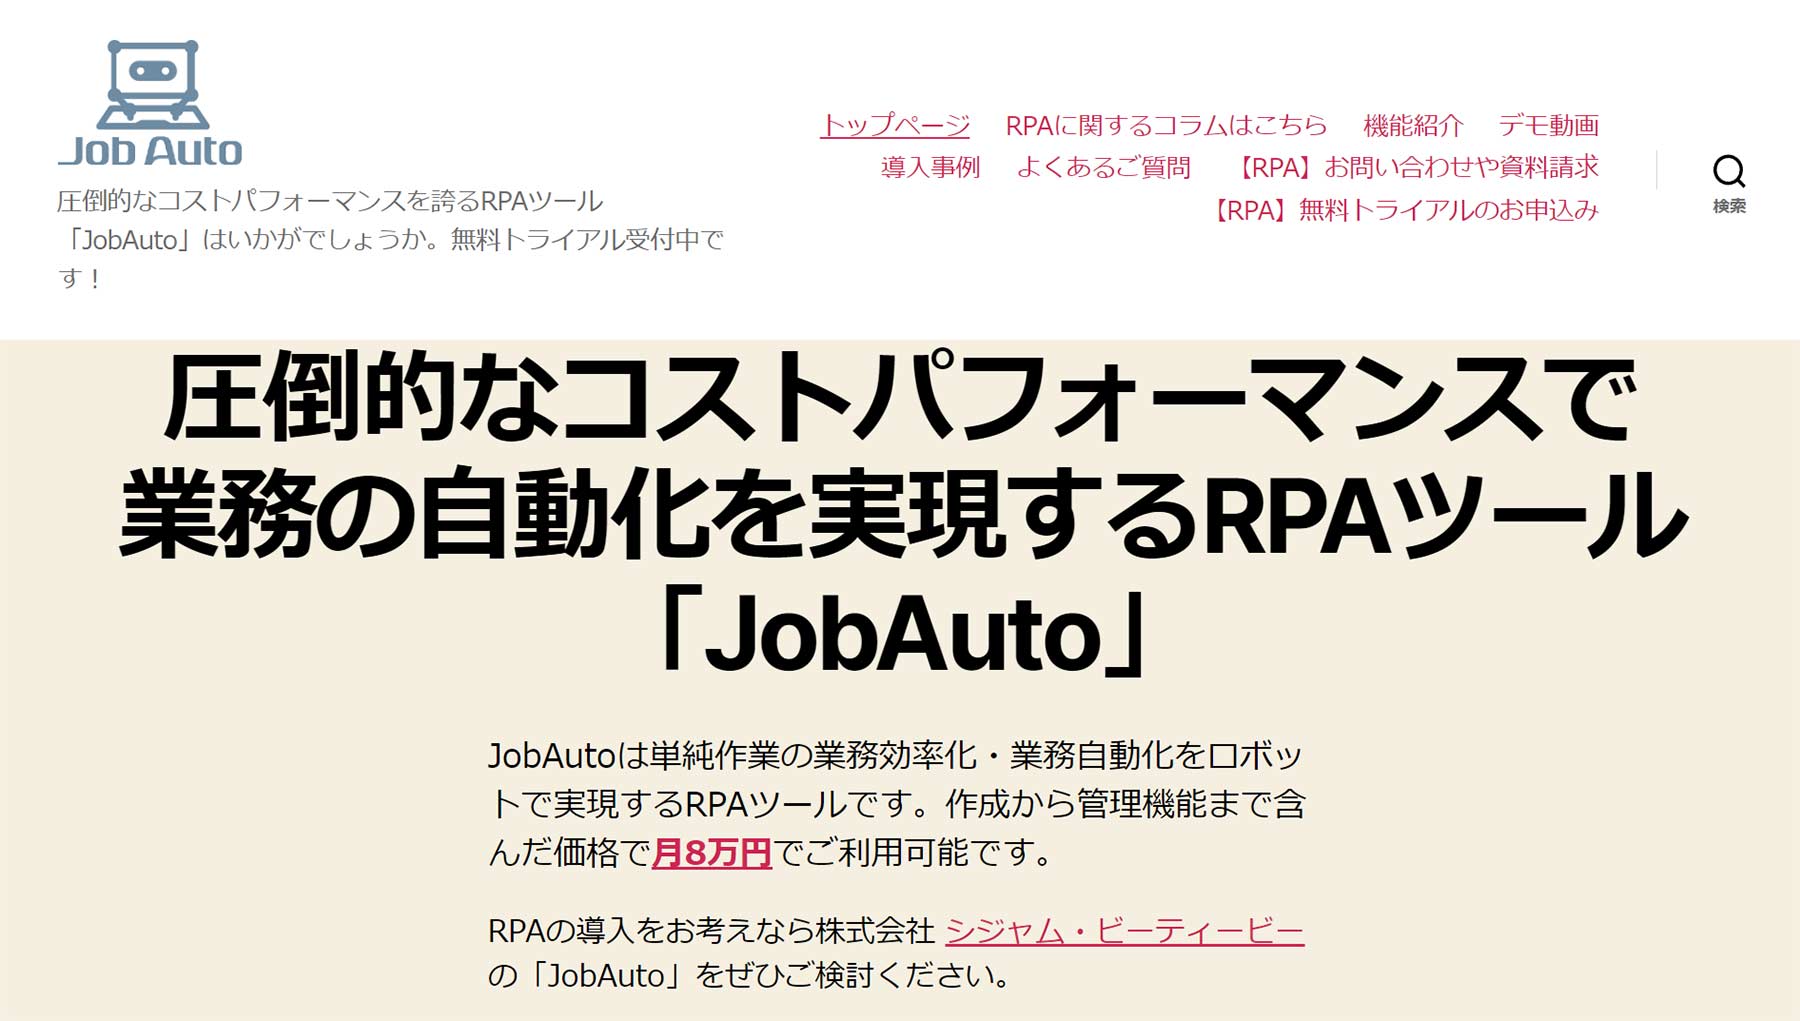 JobAuto公式Webサイト